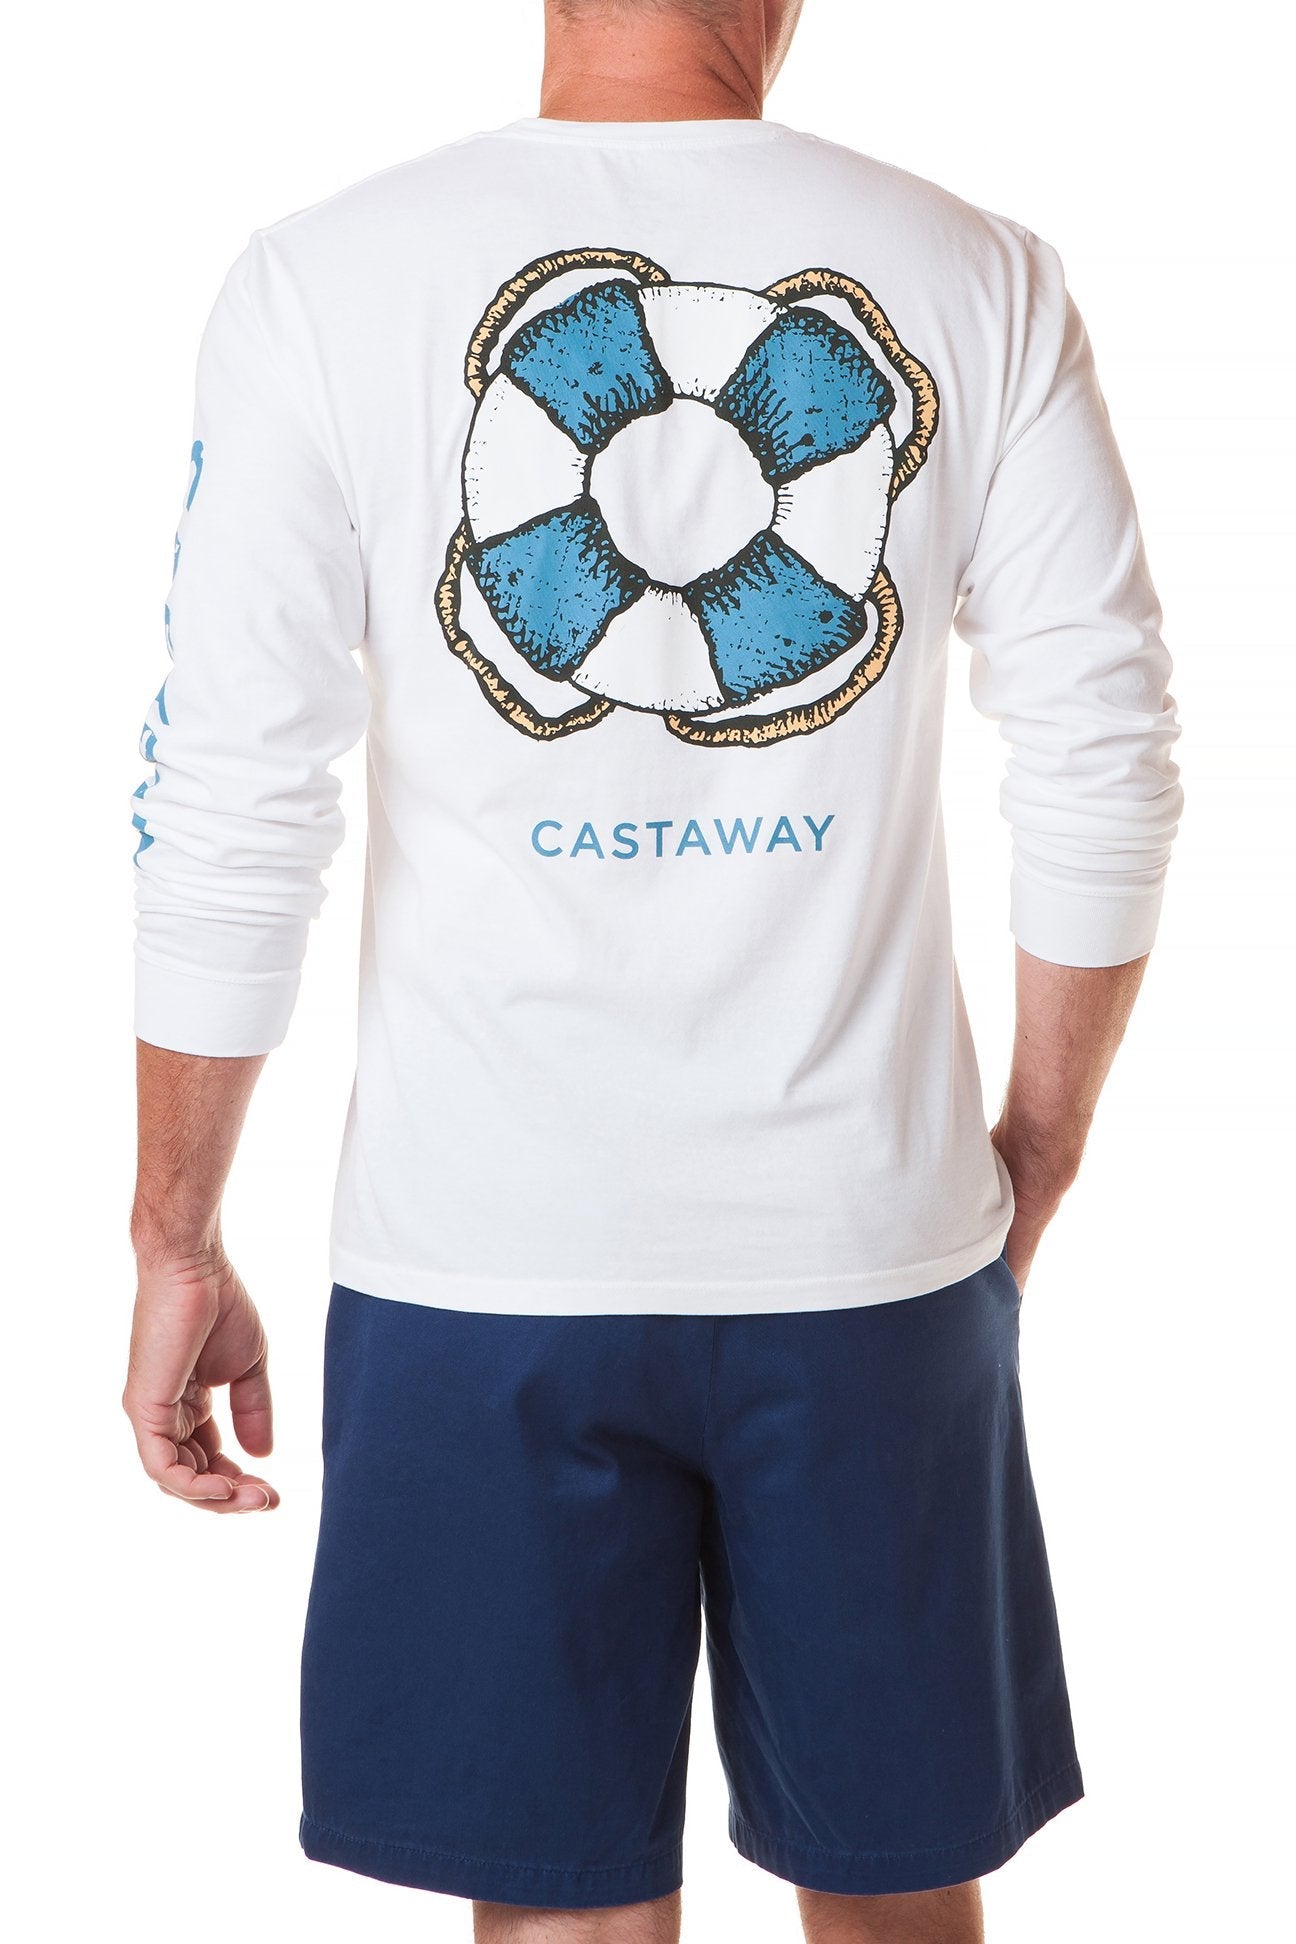 Castaway Mens Long Sleeve Tee Shirt White – Castaway Nantucket Island